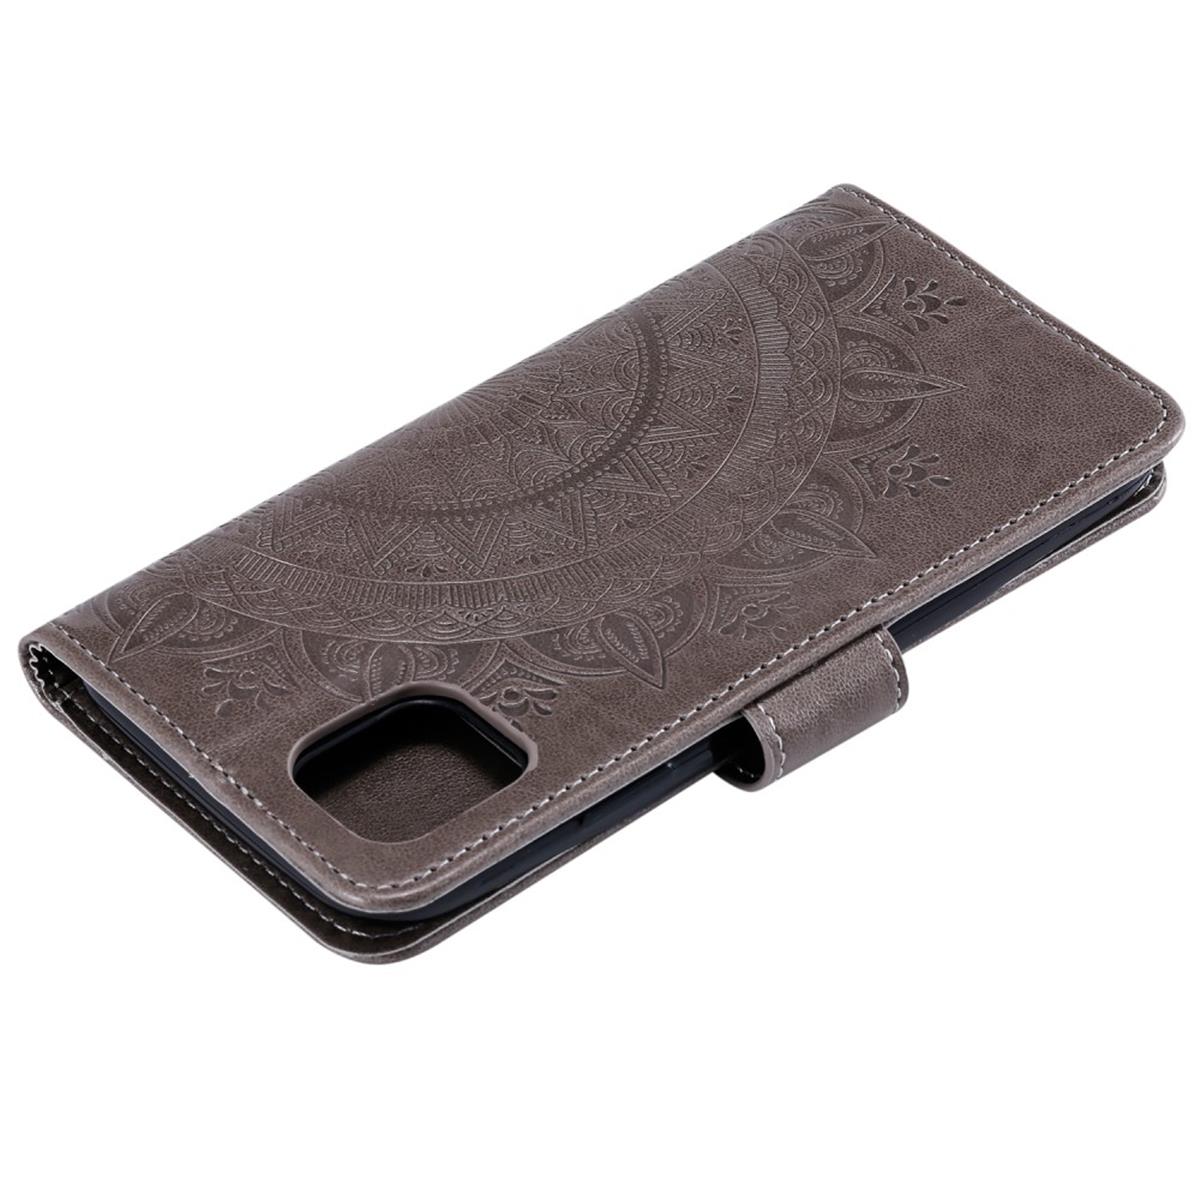 Hülle für Apple iPhone 12 Mini Handyhülle Flip Case Cover Tasche Mandala Grau